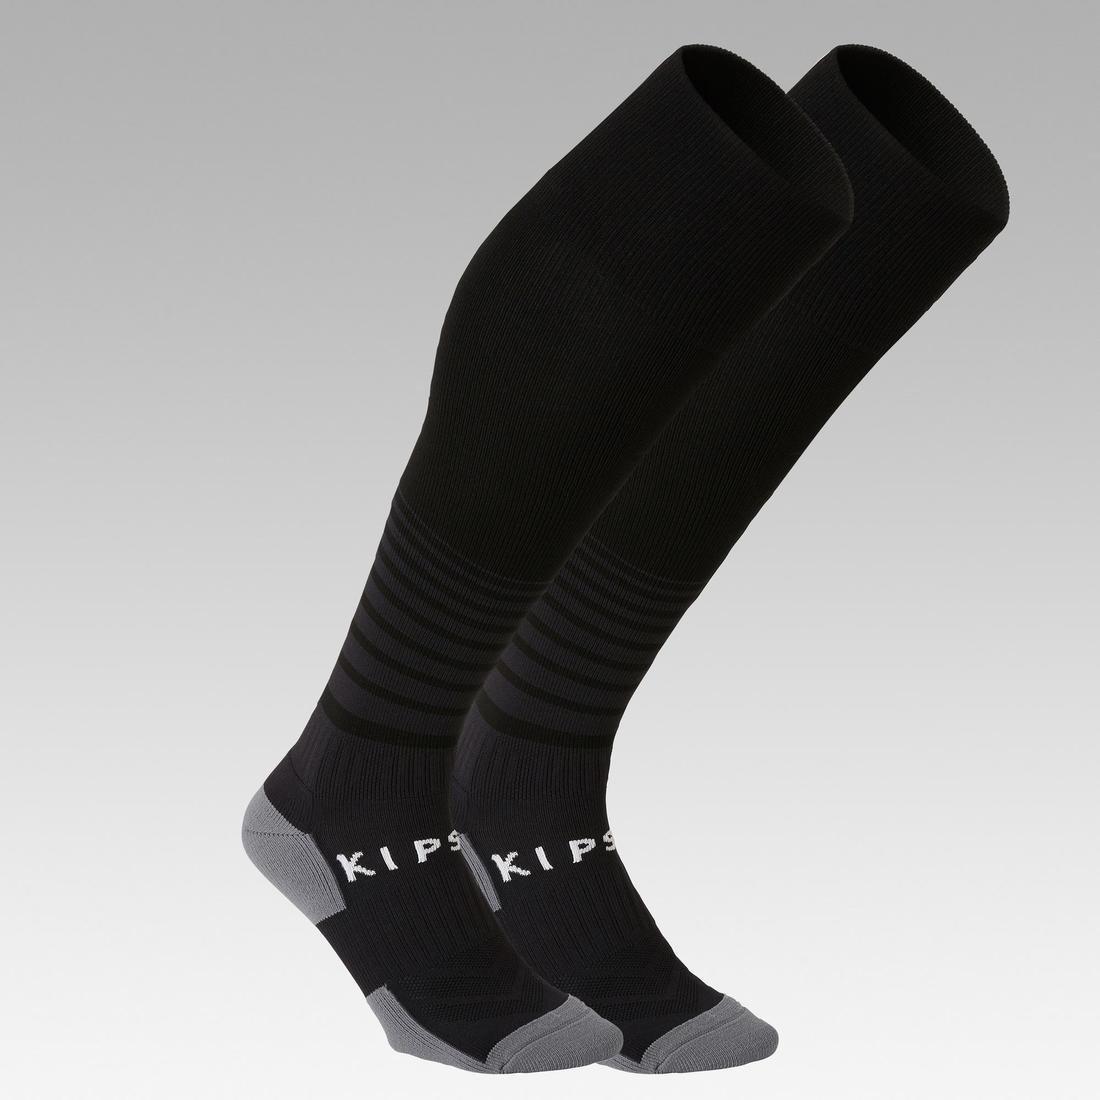 KIPSTA - Kids Football Socks F500 - White With Stripes